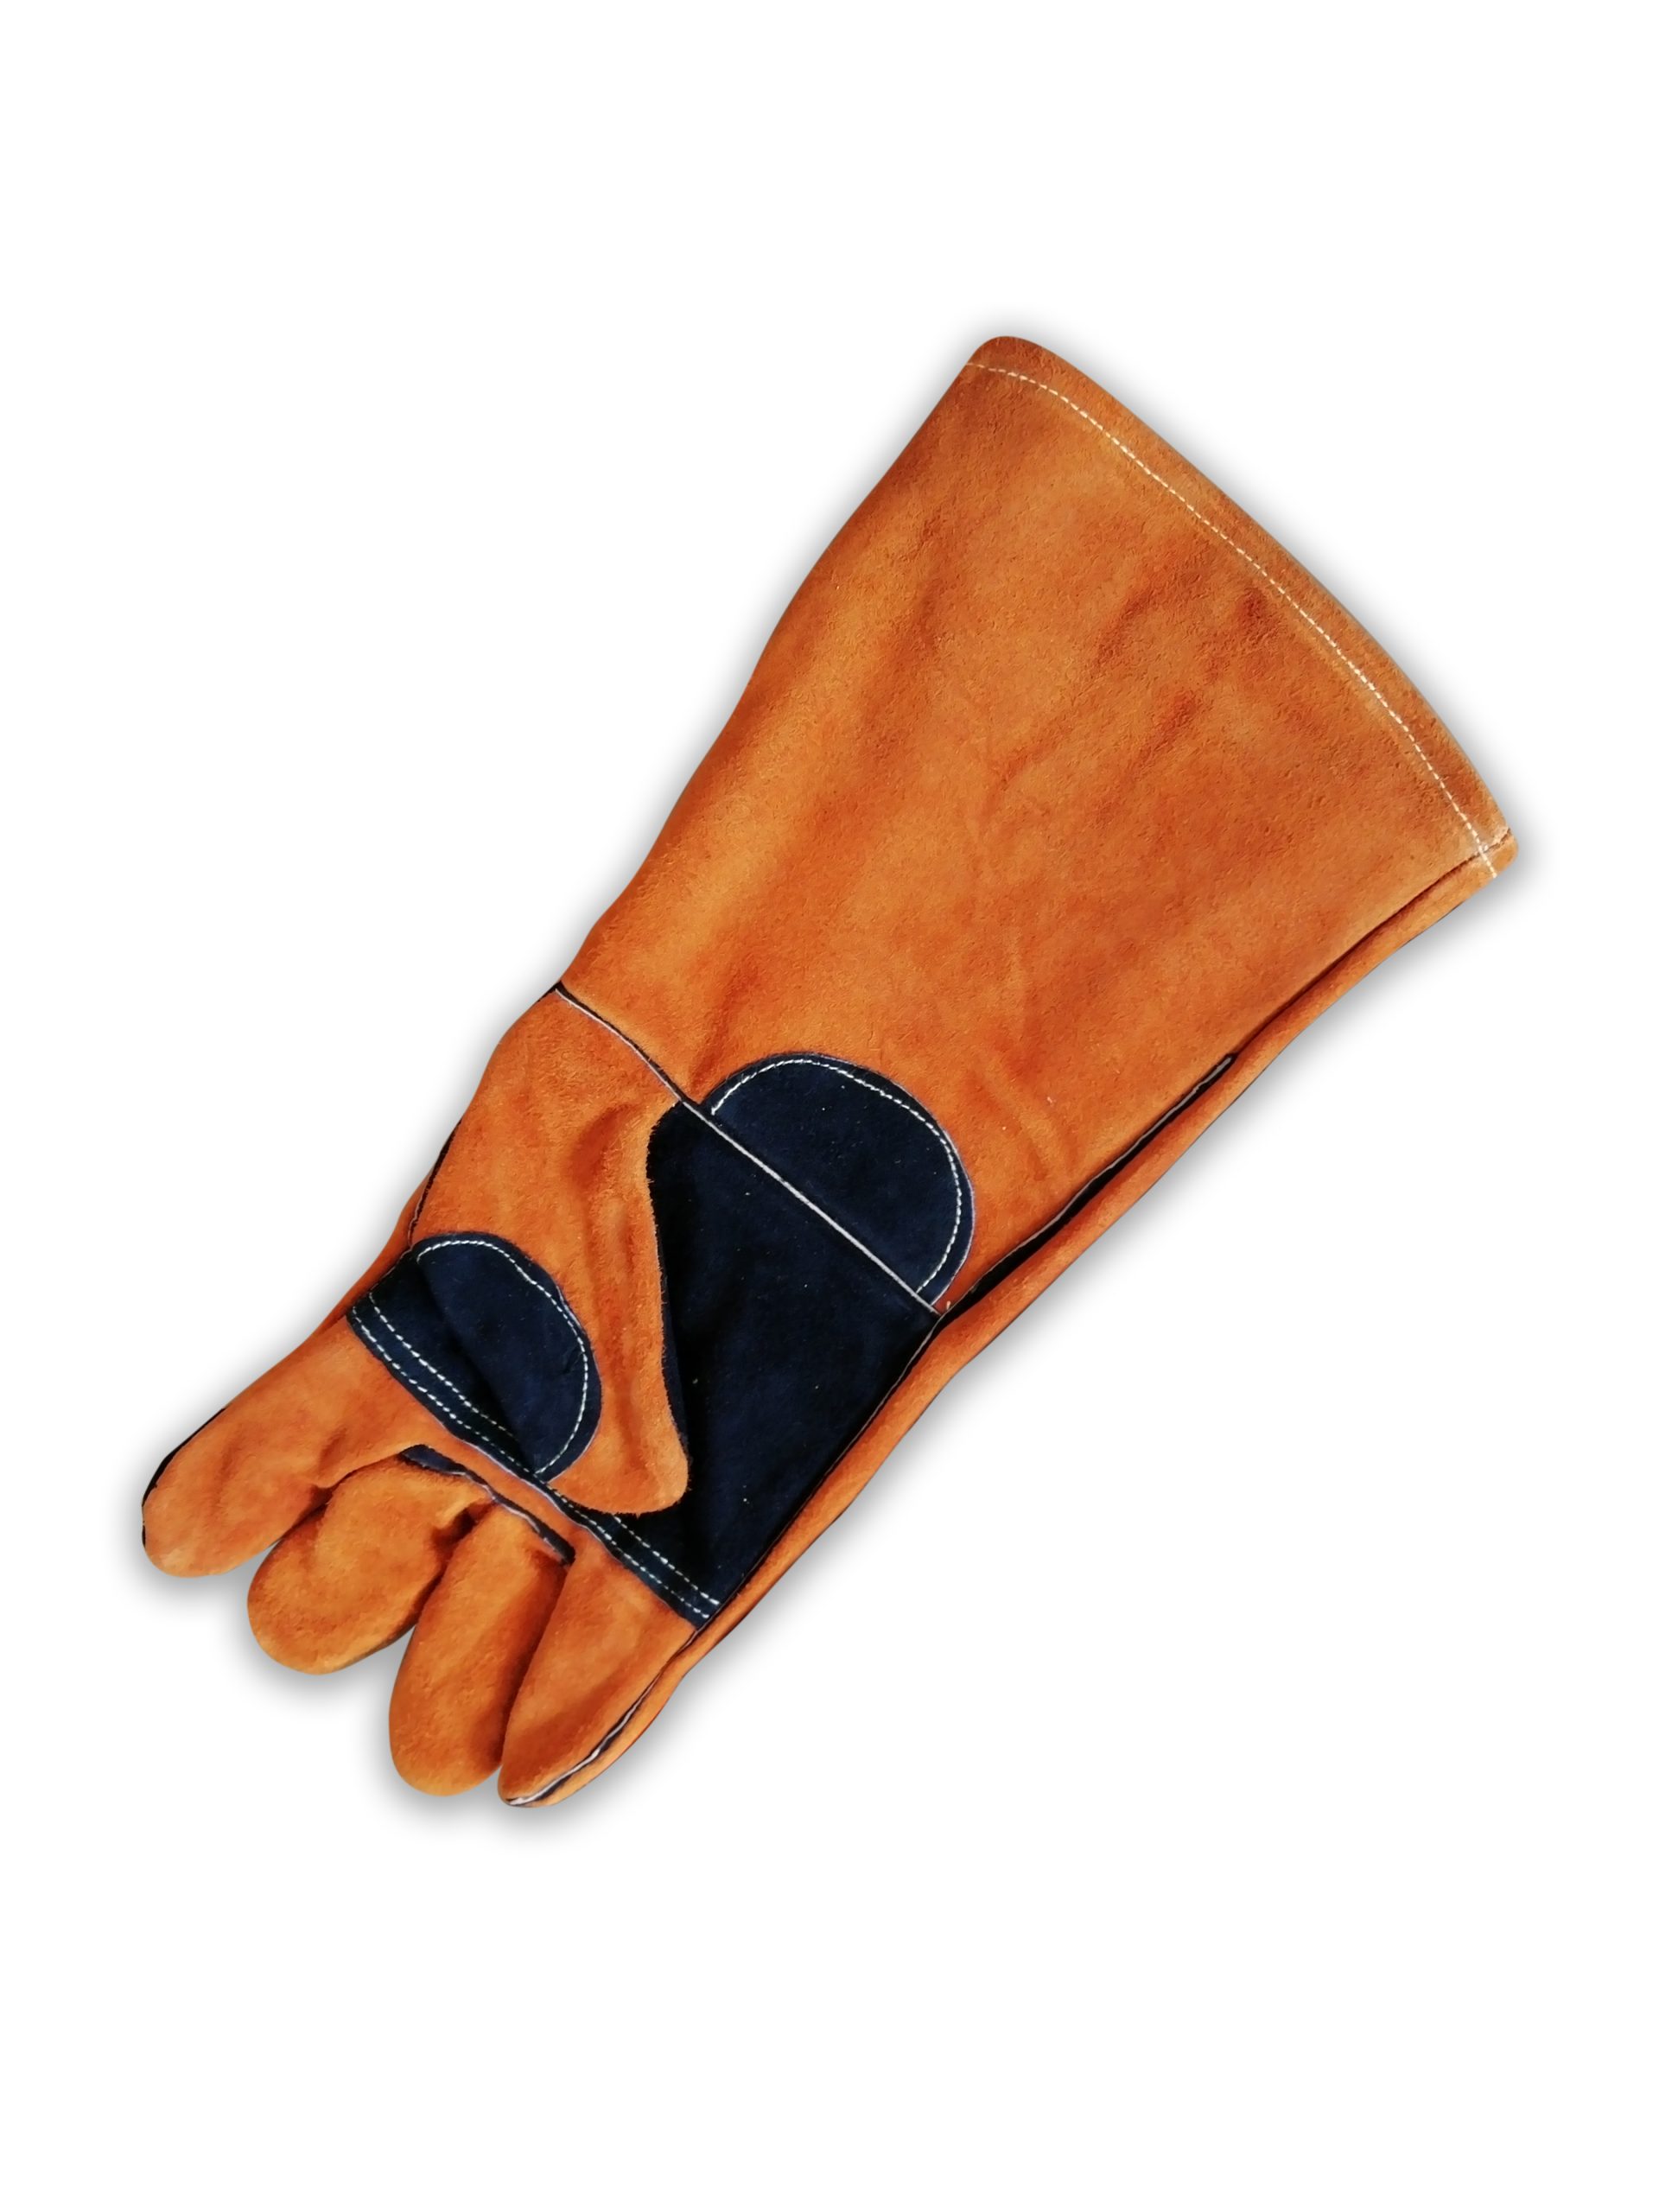 An image of Fontana Leather Glove